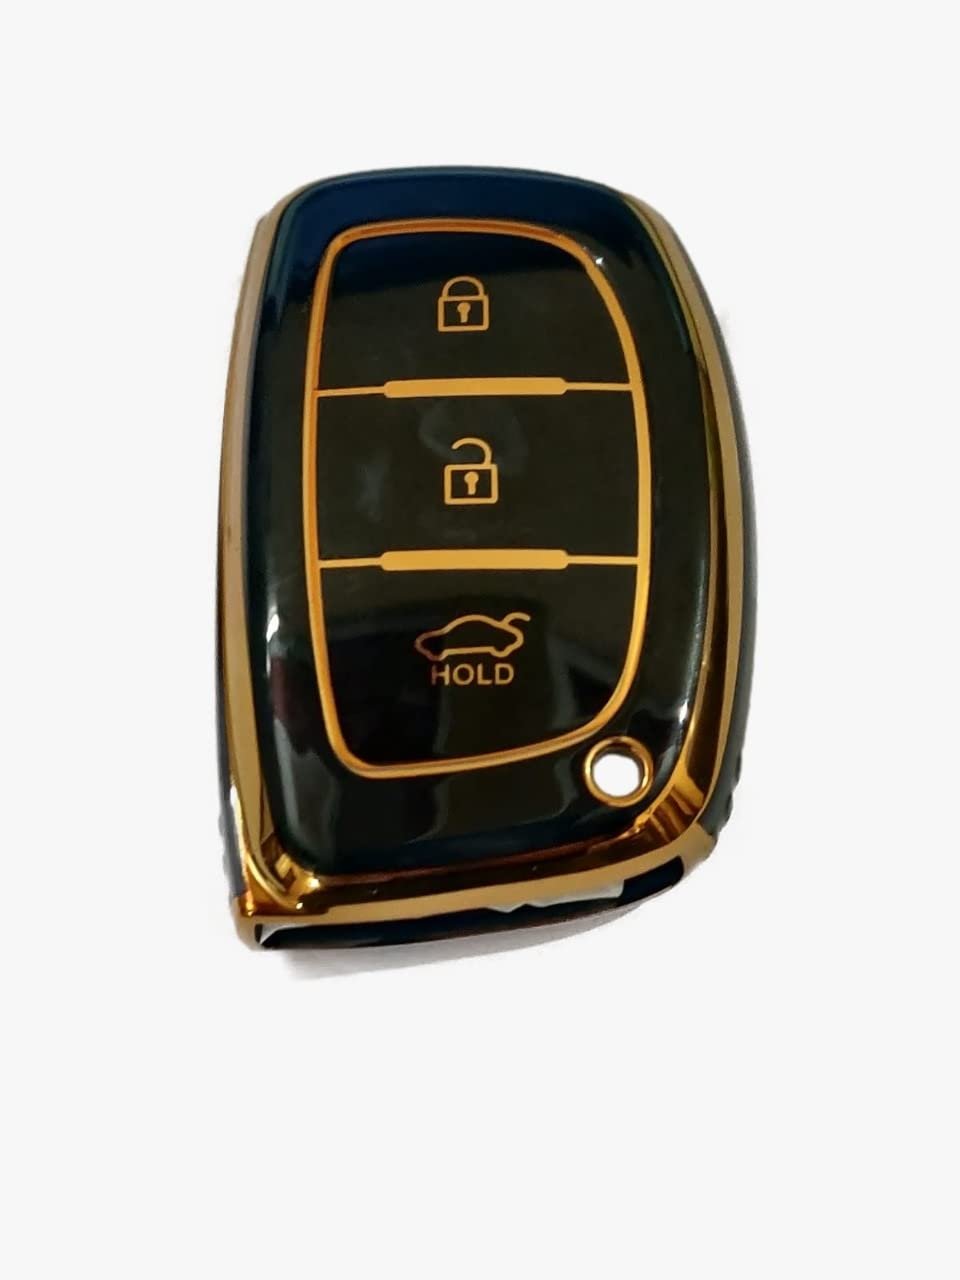 Crystal TPU Carbon Fiber Style 3 Button Remote Push Start Smart Key Cover for Creta, Grand i10, i20 Elite, i10 Nios, i20 Active, Verna,Aura (Gold/Black) Image